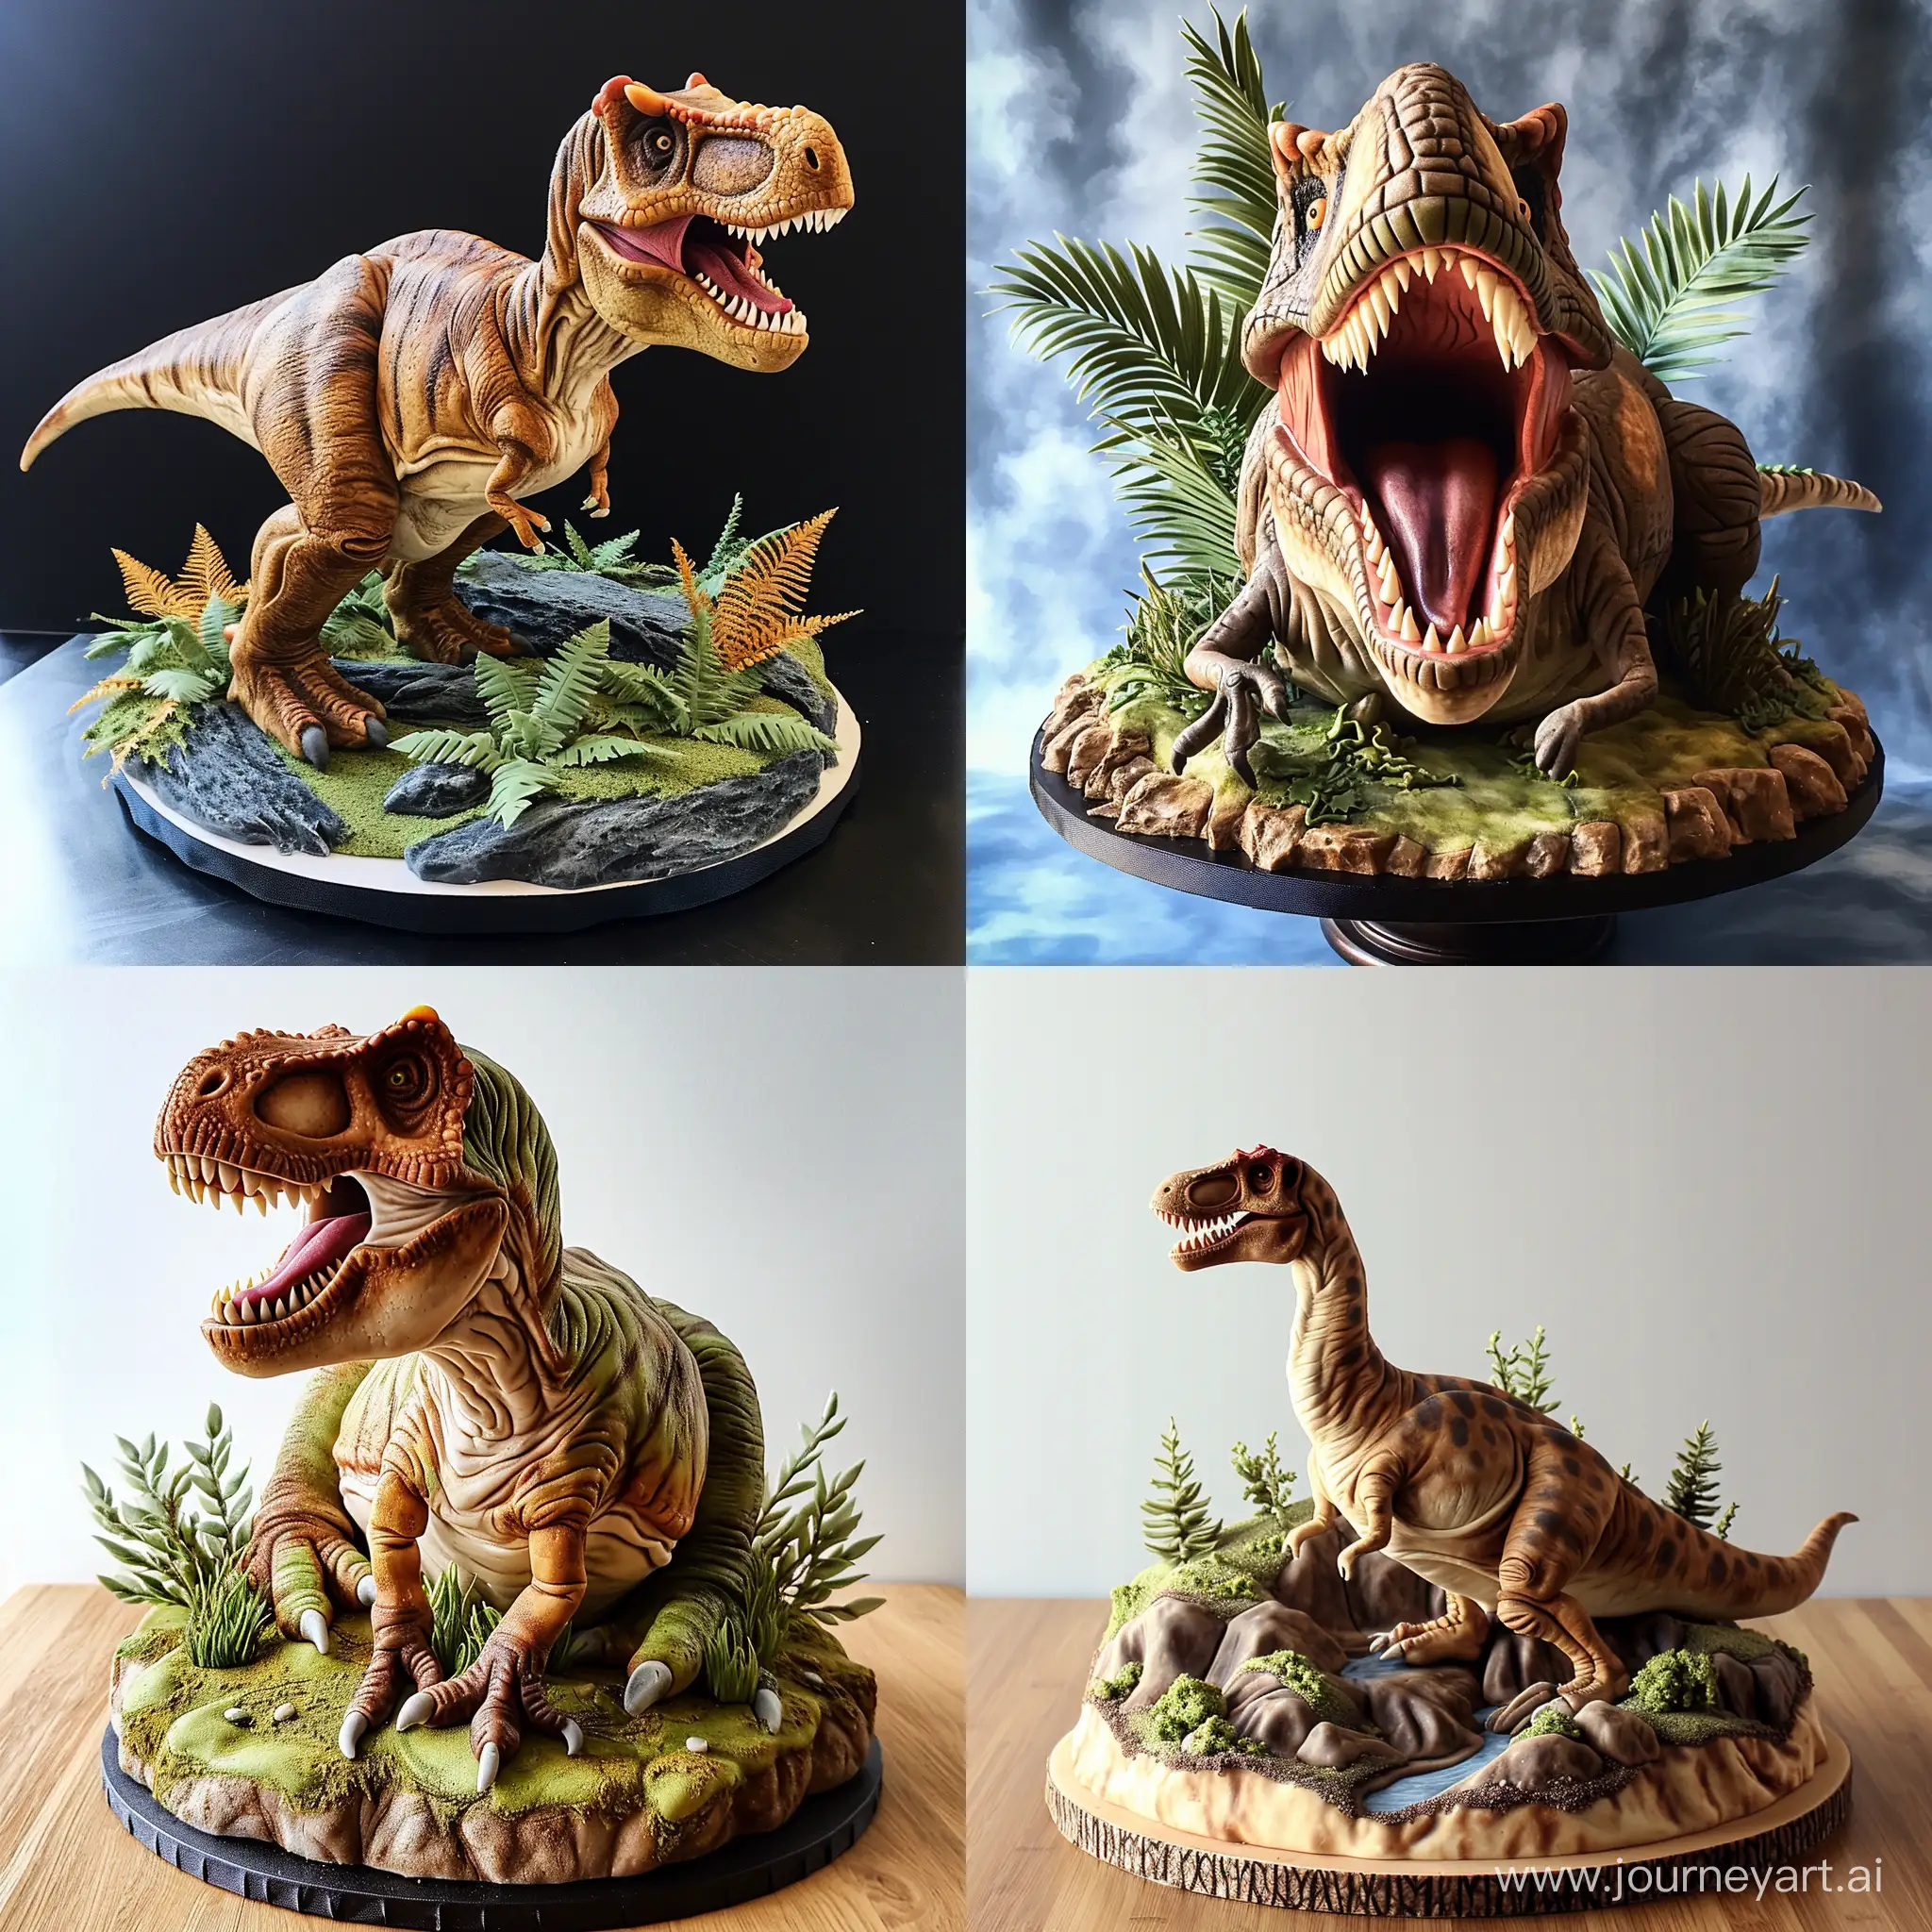 Realistic-Dinosaur-Cake-Sculpture-Stunning-Photorealistic-Dessert-Art